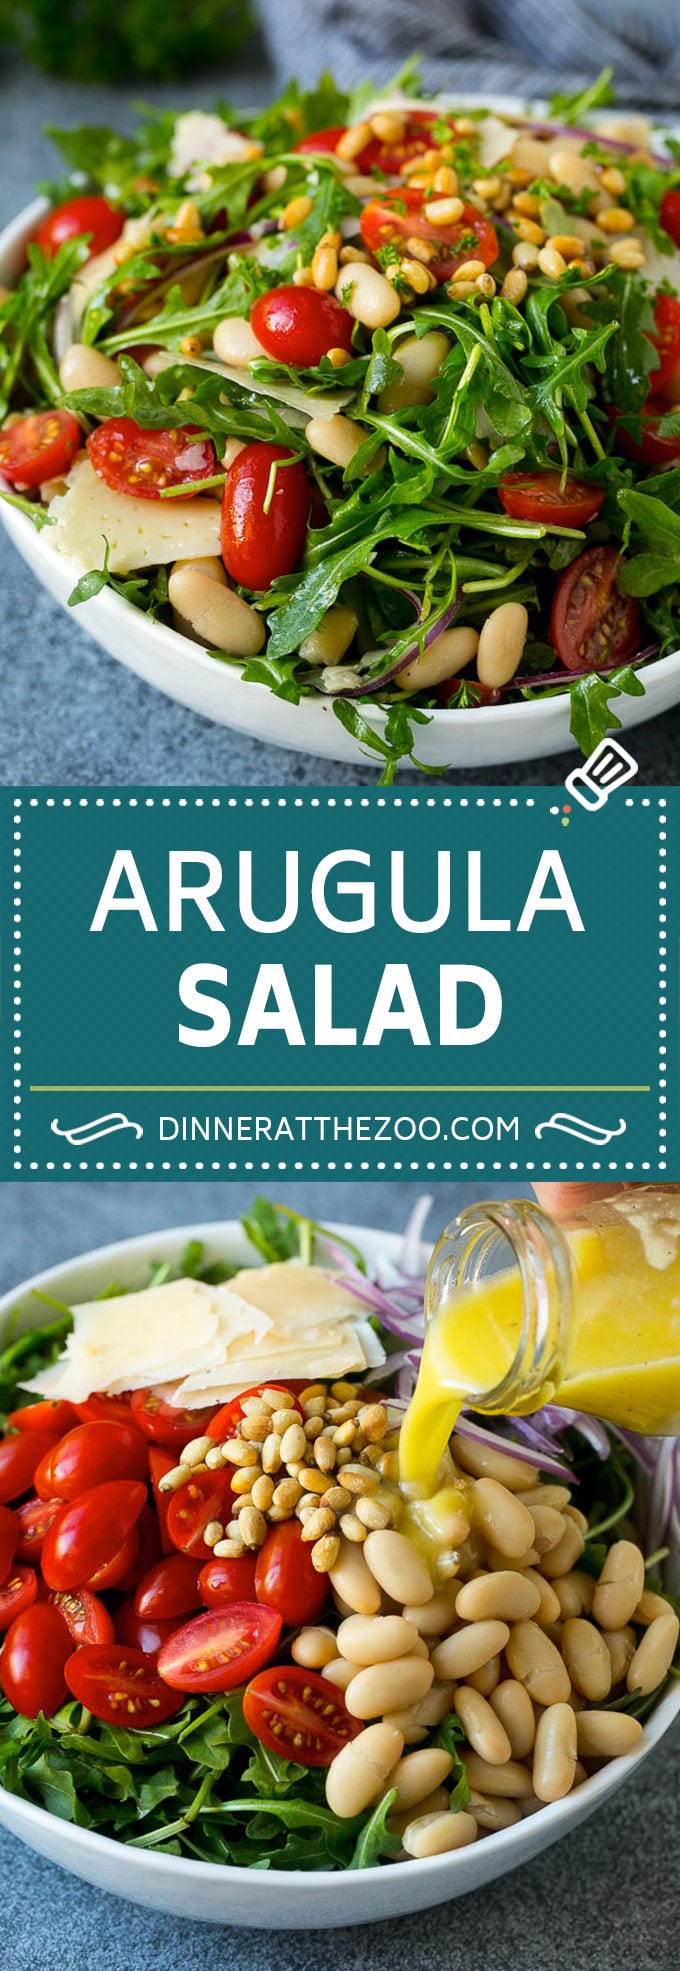 Arugula Salad Recipe | Green Salad | White Bean Salad #salad #arugula #cleaneating #lowcarb #keto #dinneratthezoo